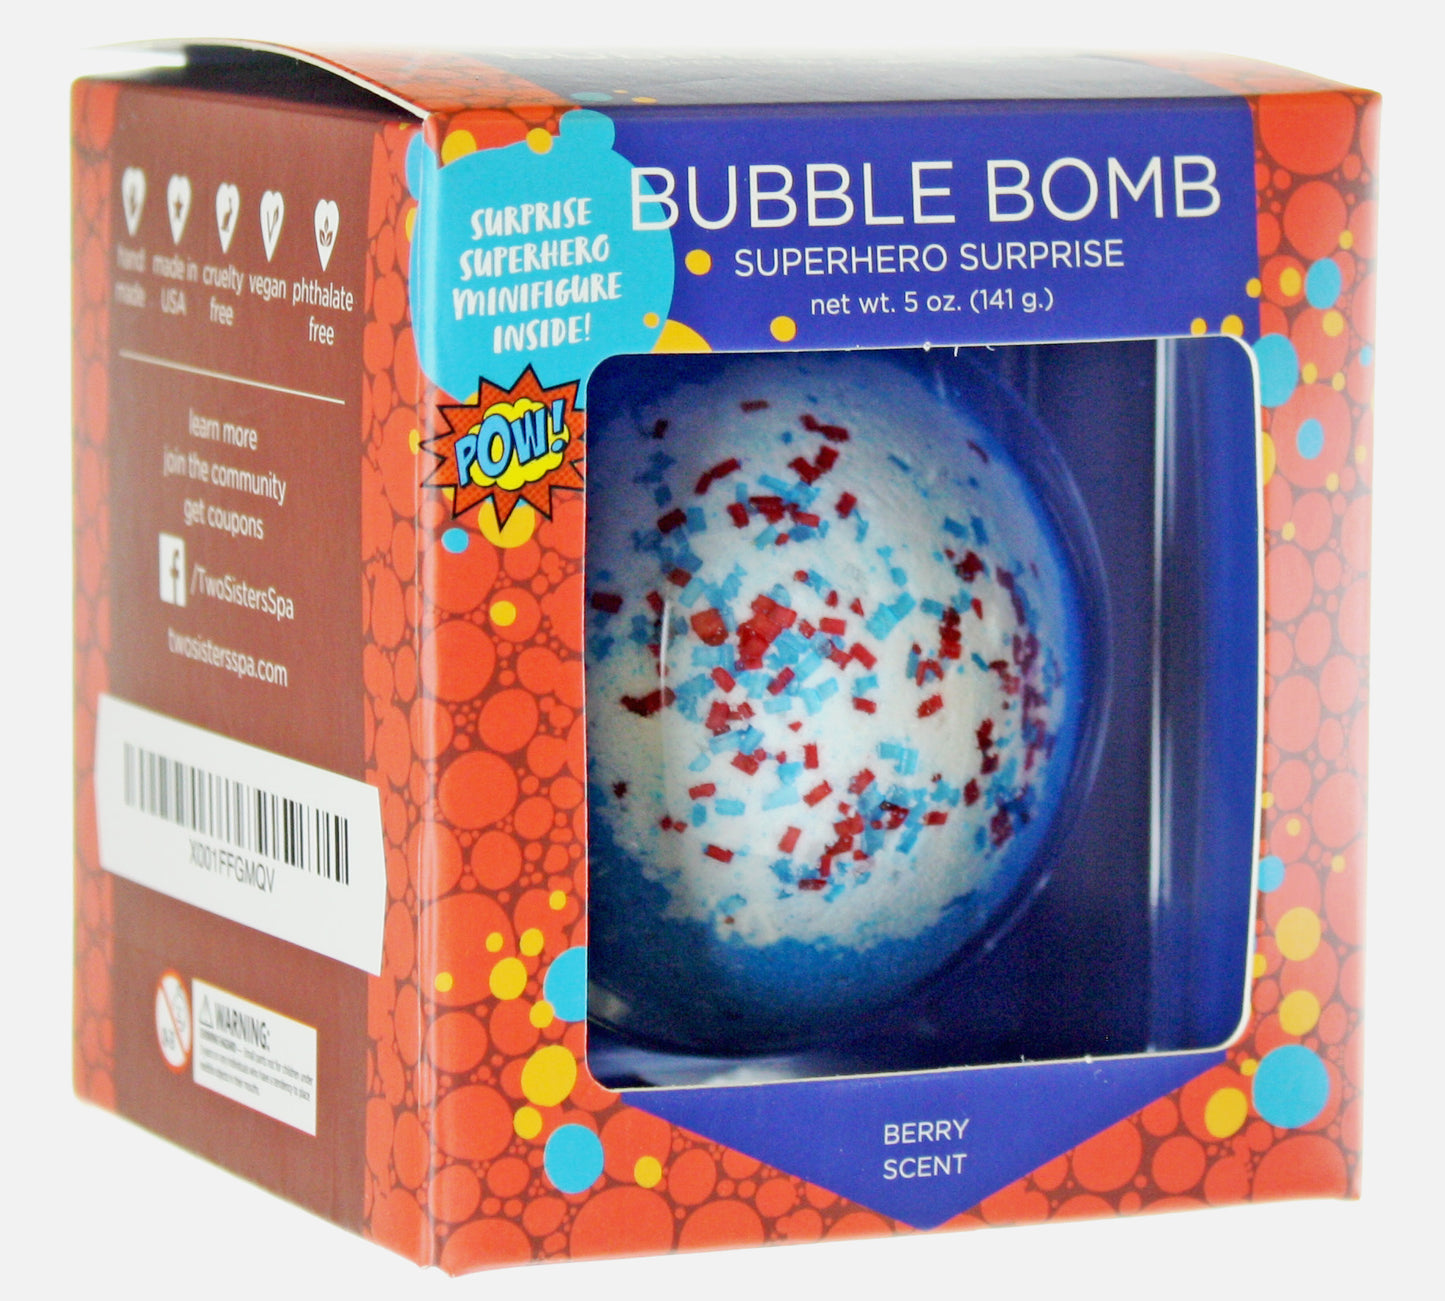 Superhero Surprise Bubble Bath Bomb - Two Sisters Spa